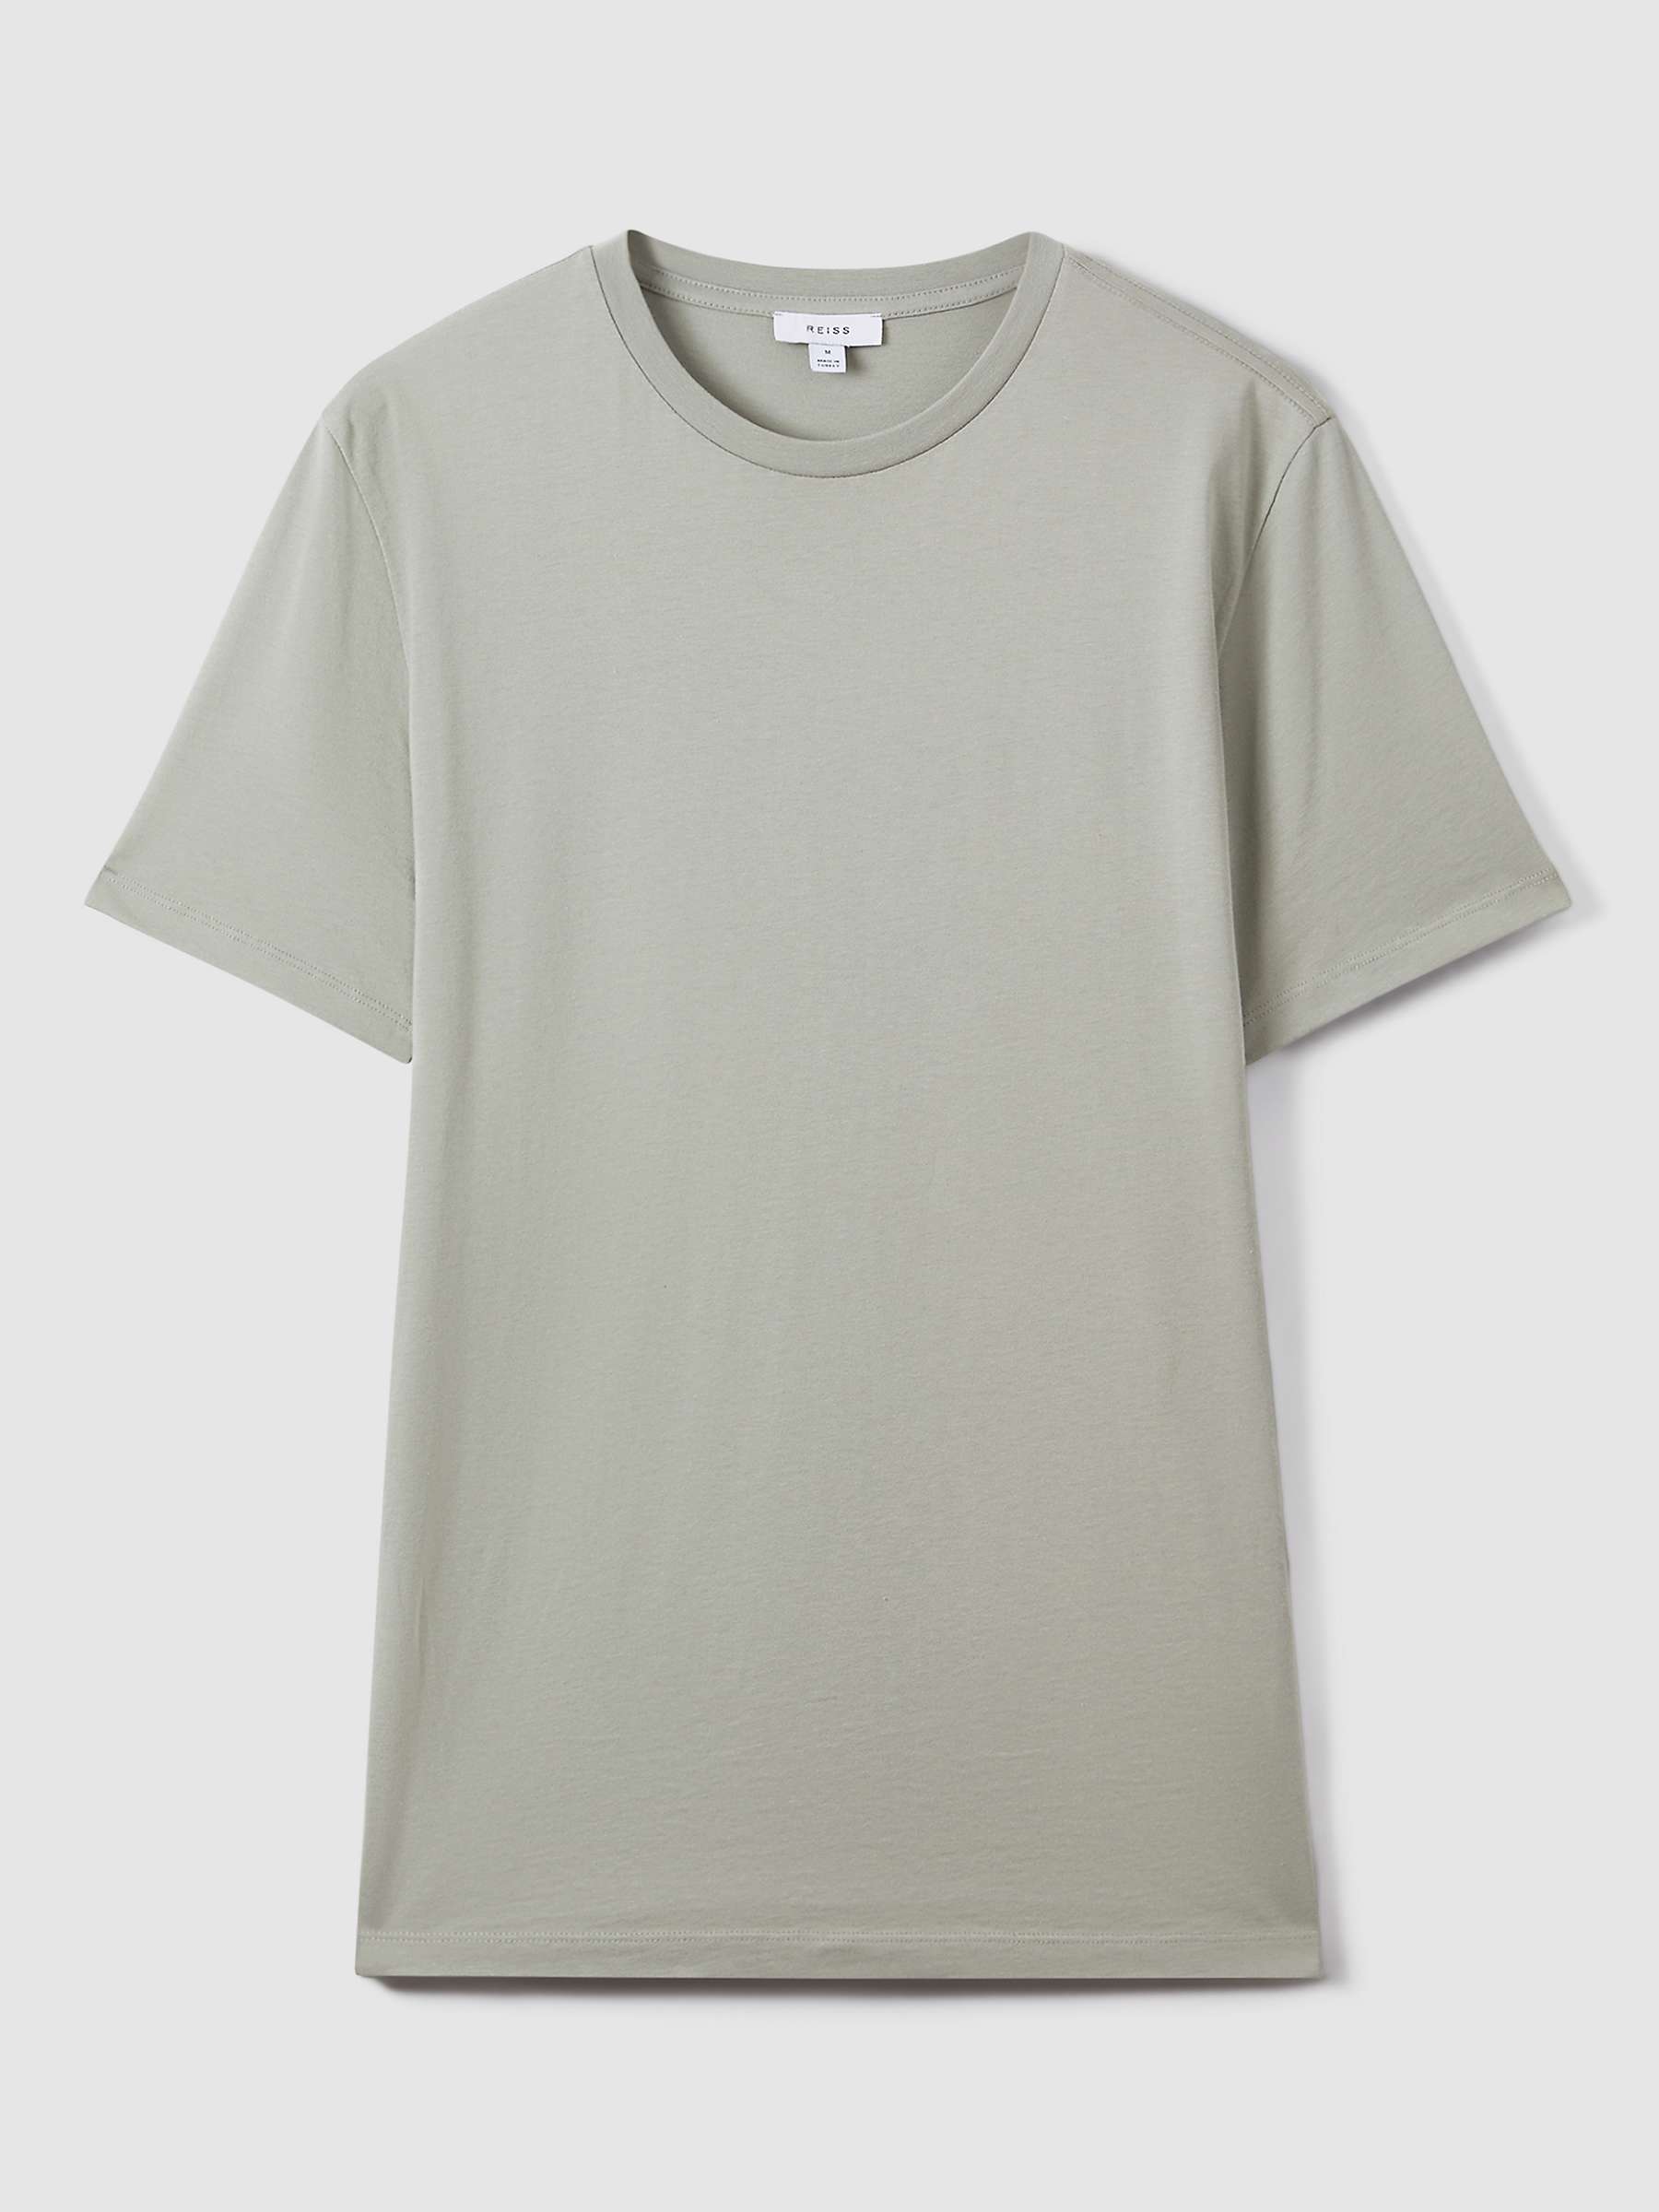 Buy Reiss Bless Cotton Crew Neck T-Shirt Online at johnlewis.com